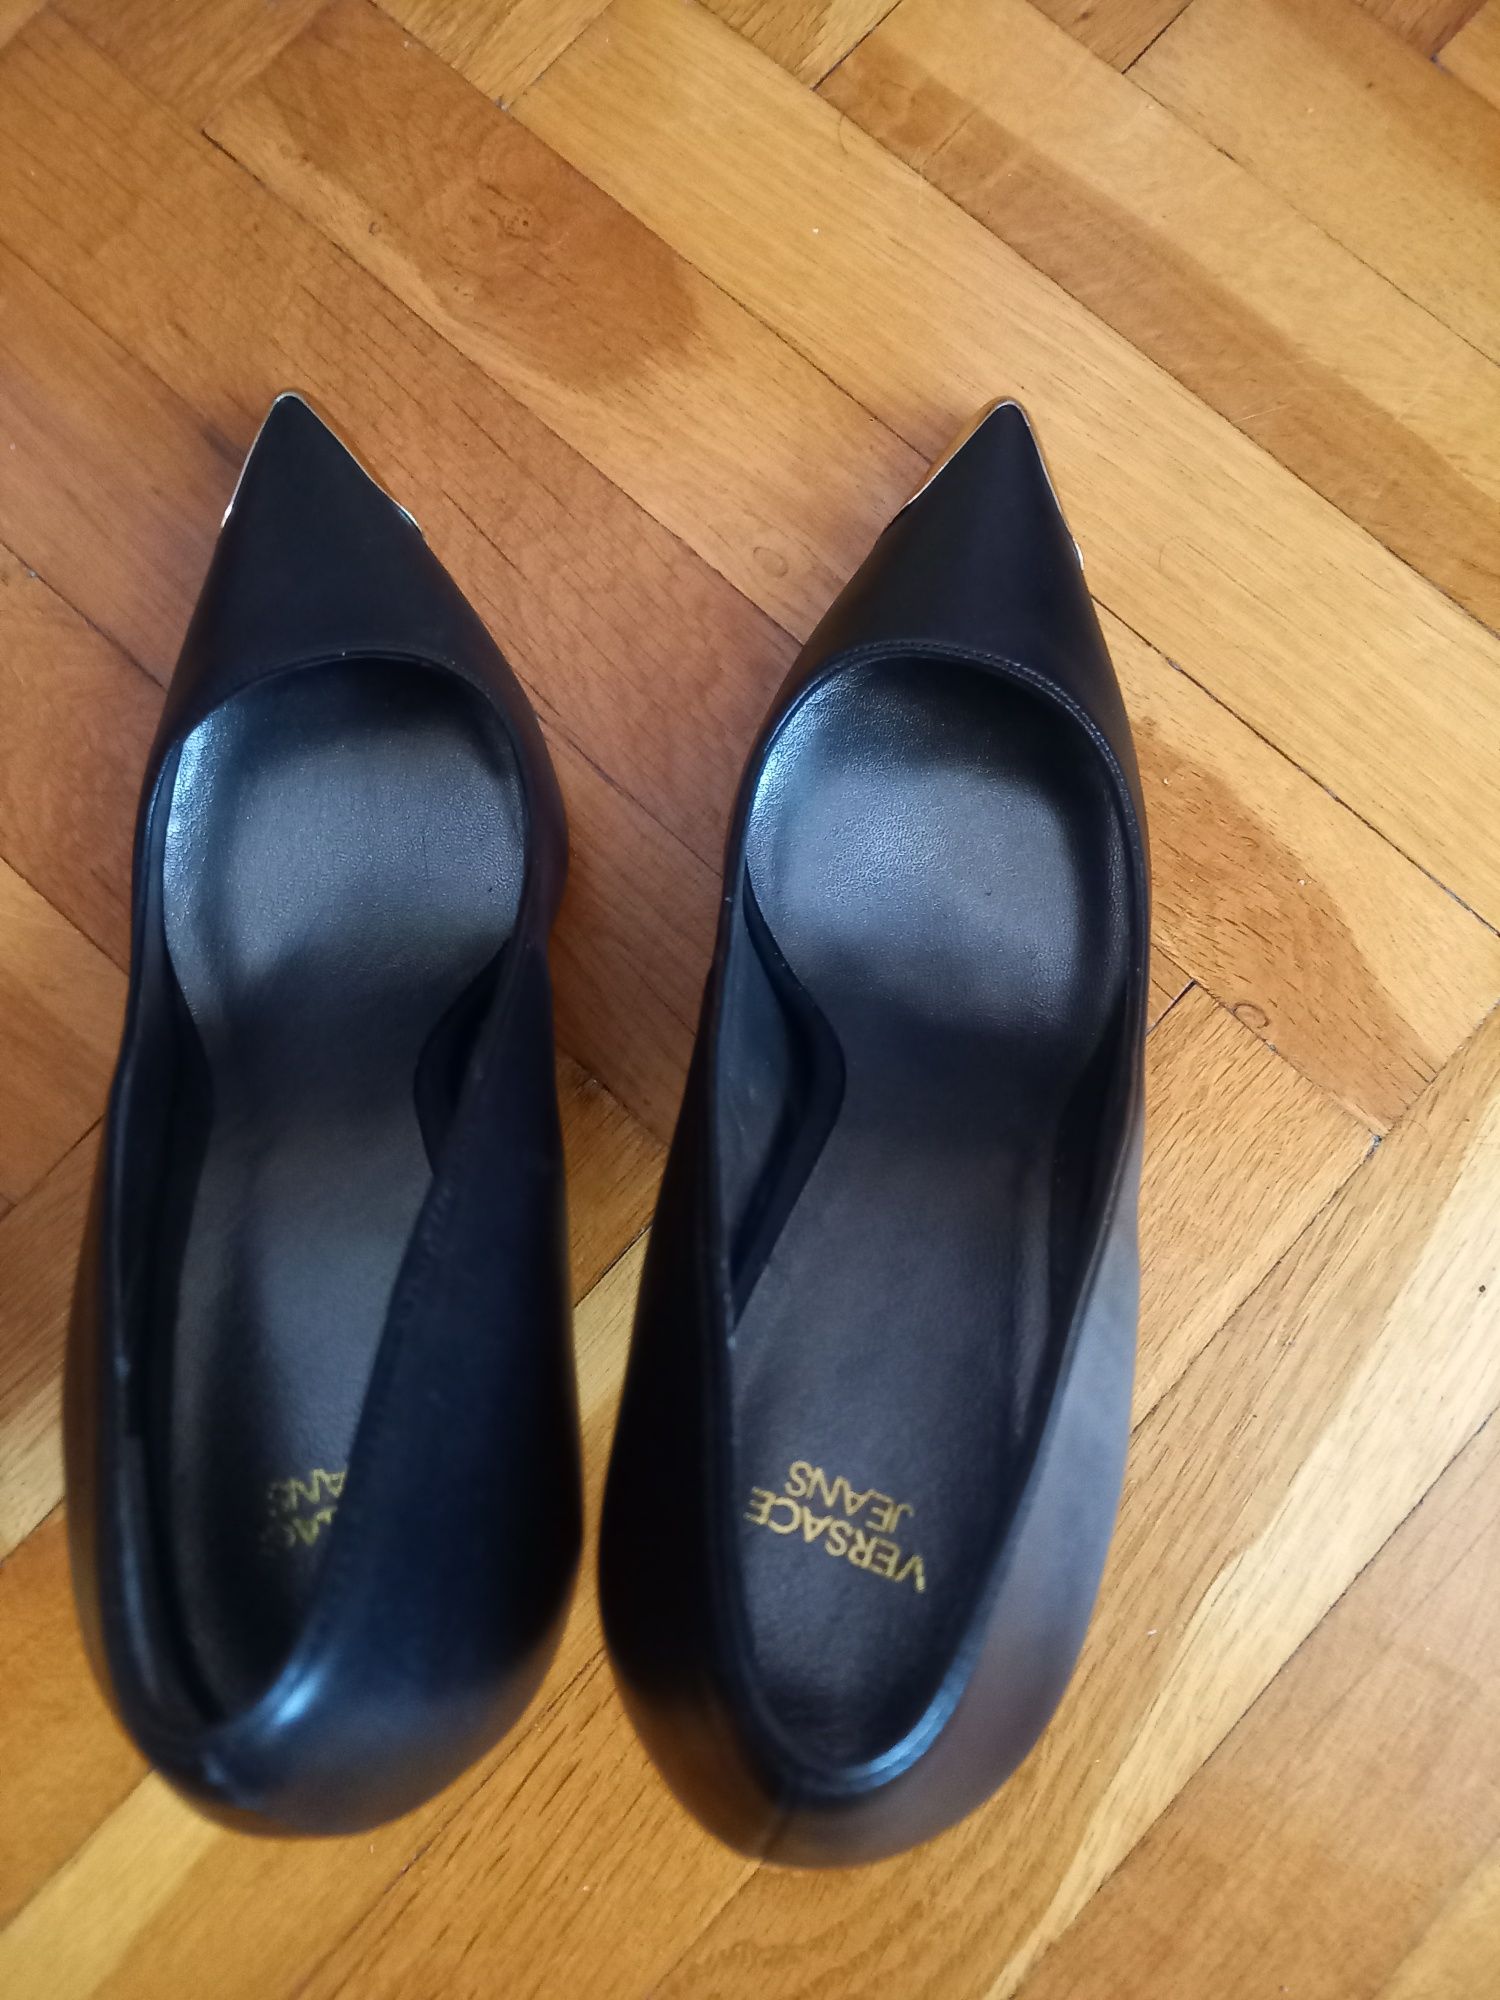 Дамски обувки Версаче 41 обували веднъж